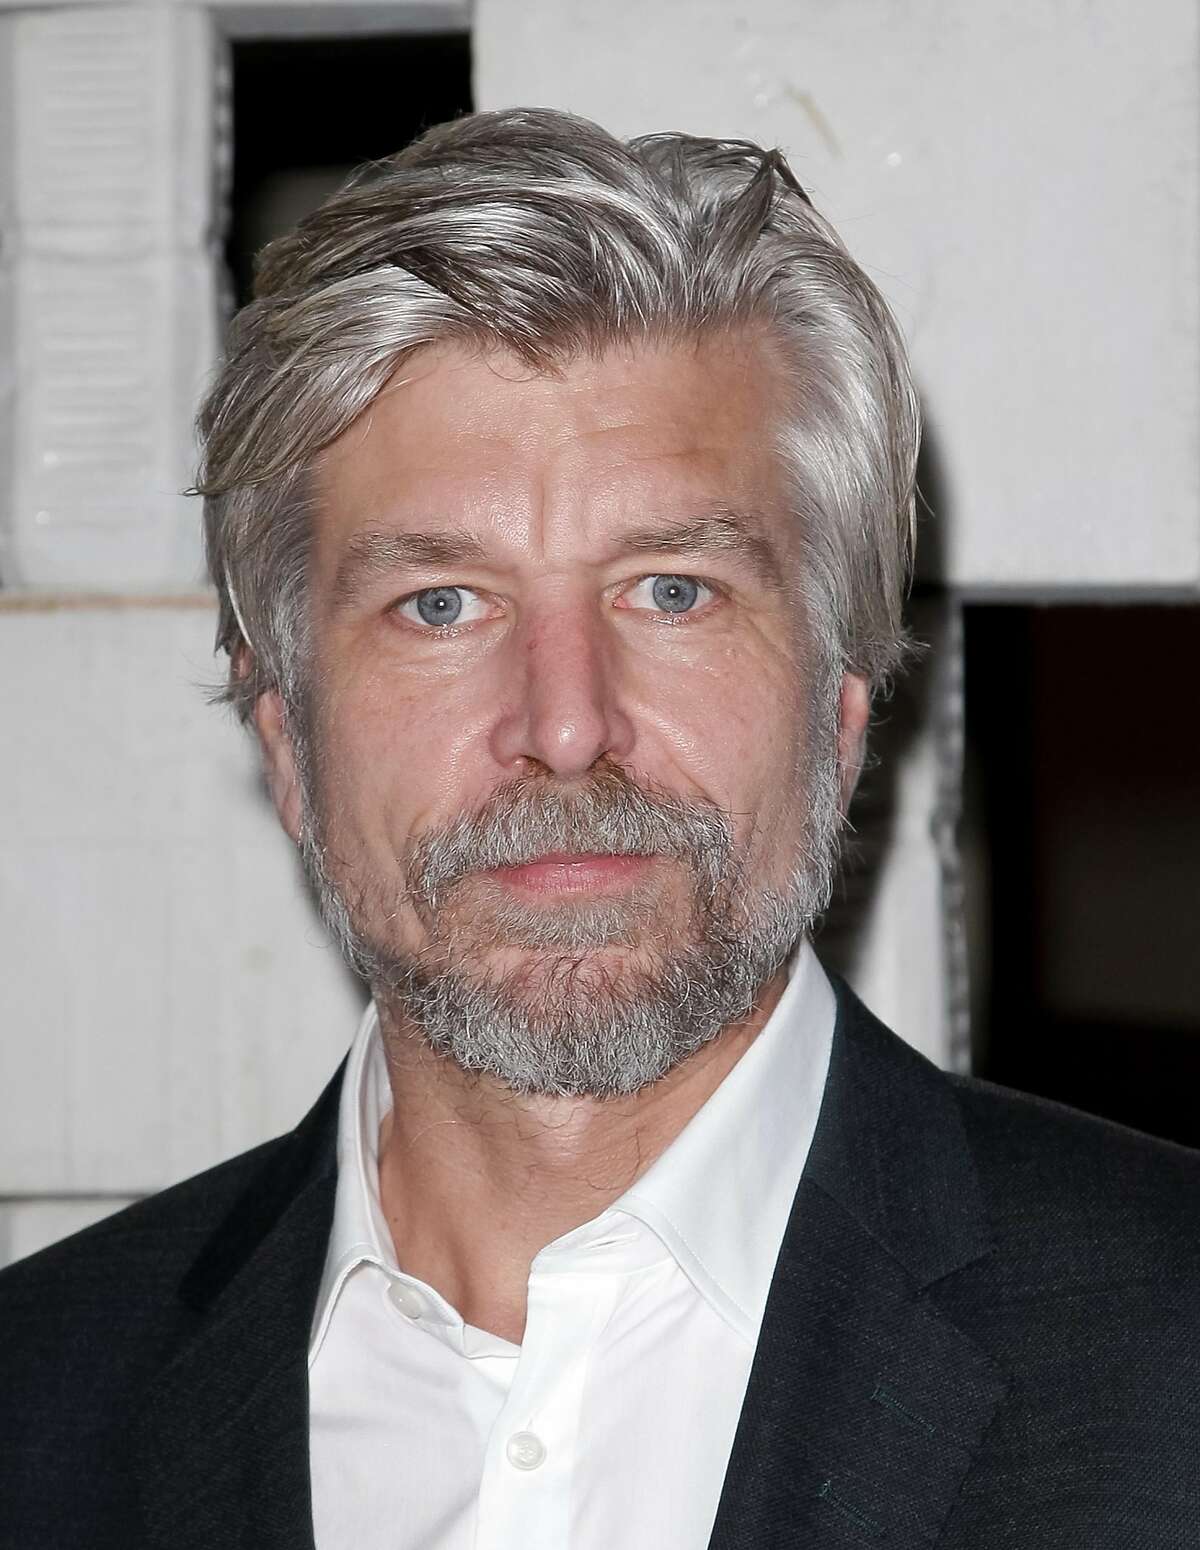 Karl Ove Knausgaard, co-author of "Home and Away"